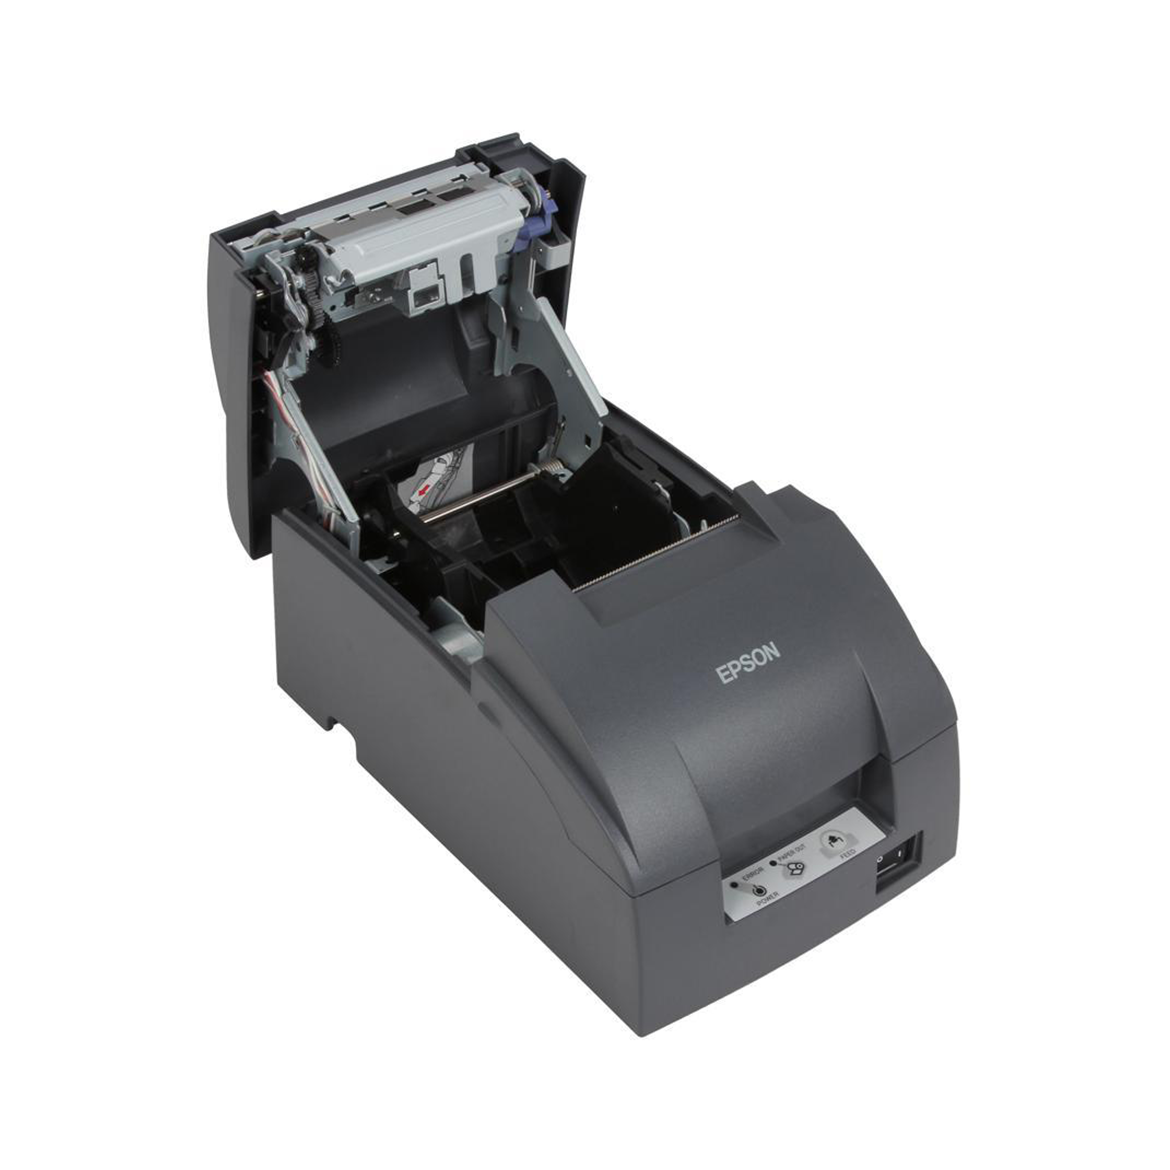 Epson TM-U220 Receipt & Kitchen Printer